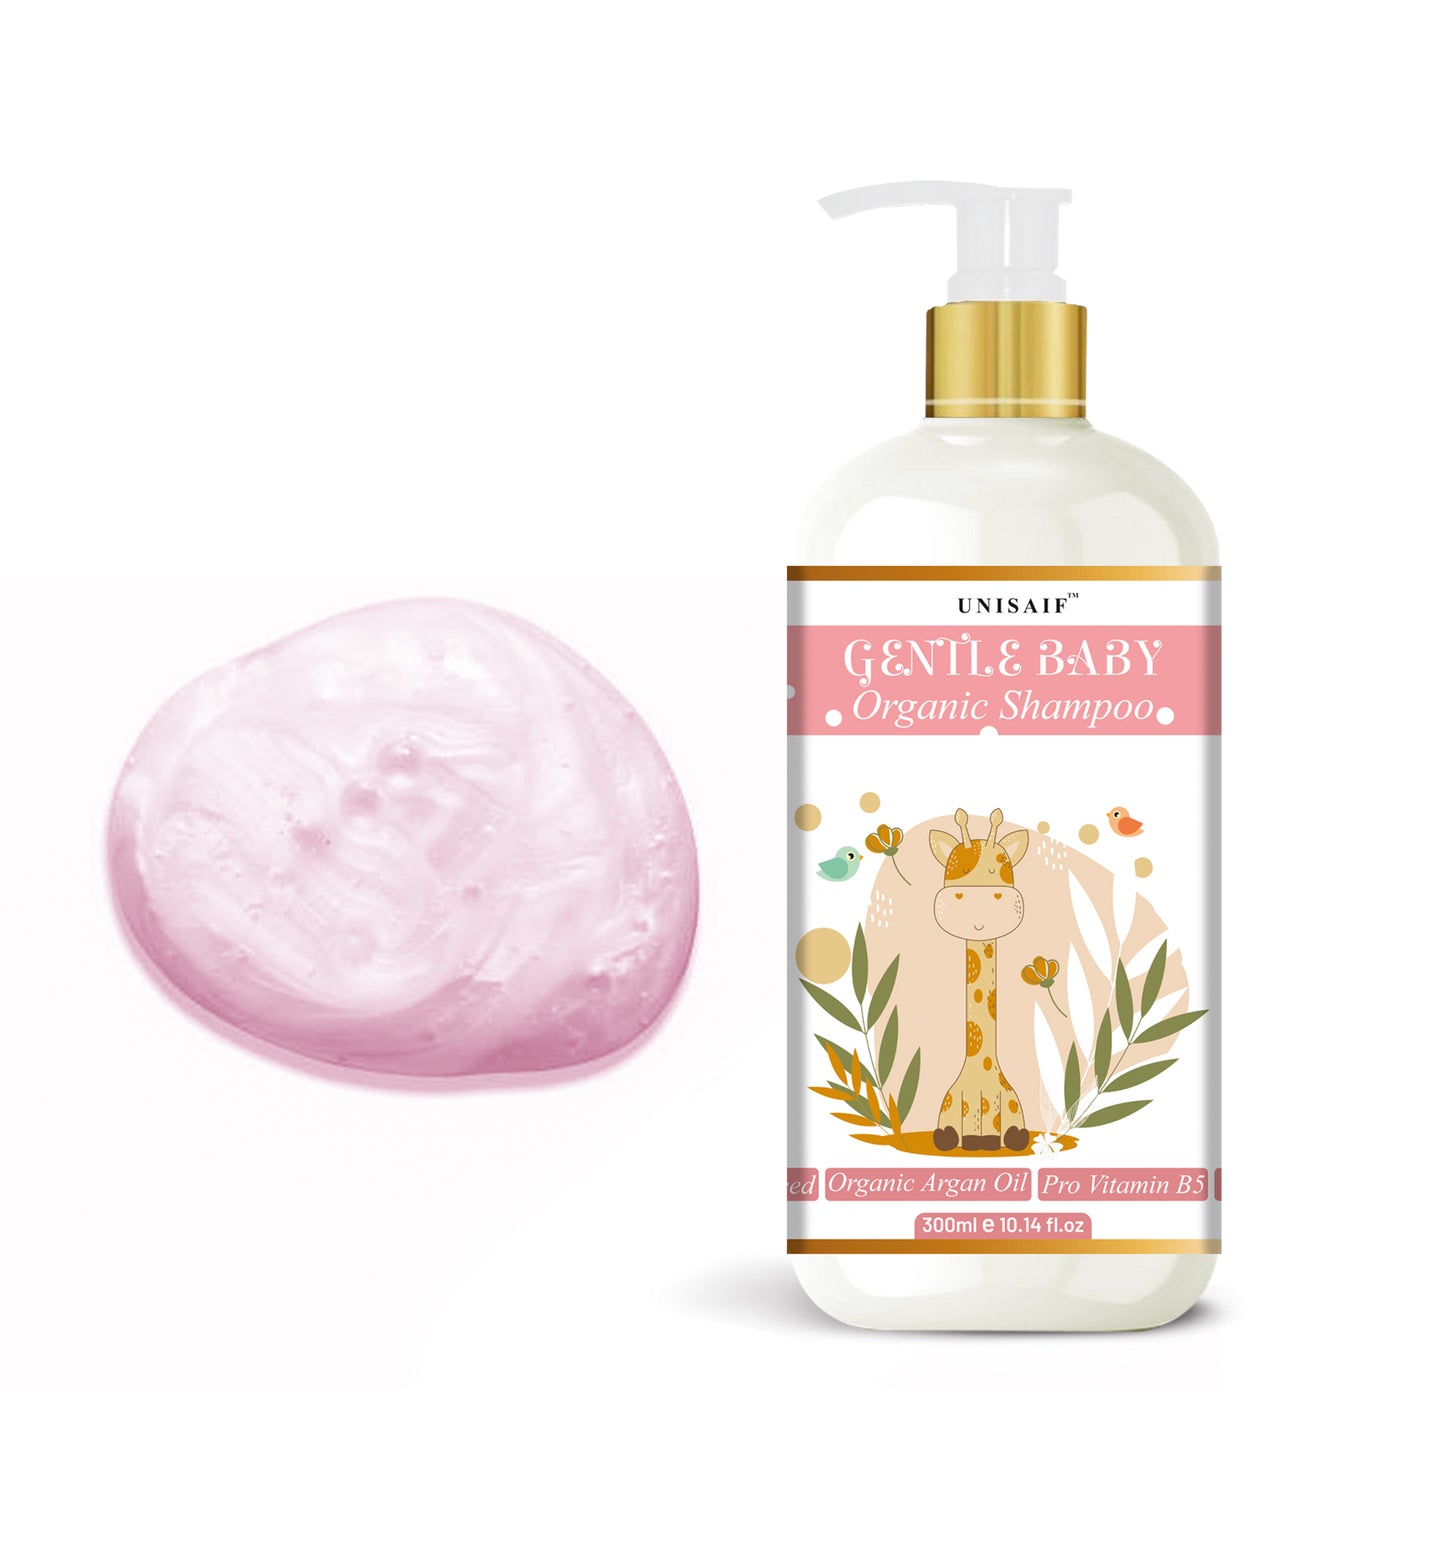 Gentle Baby Organic Shampoo 300ml